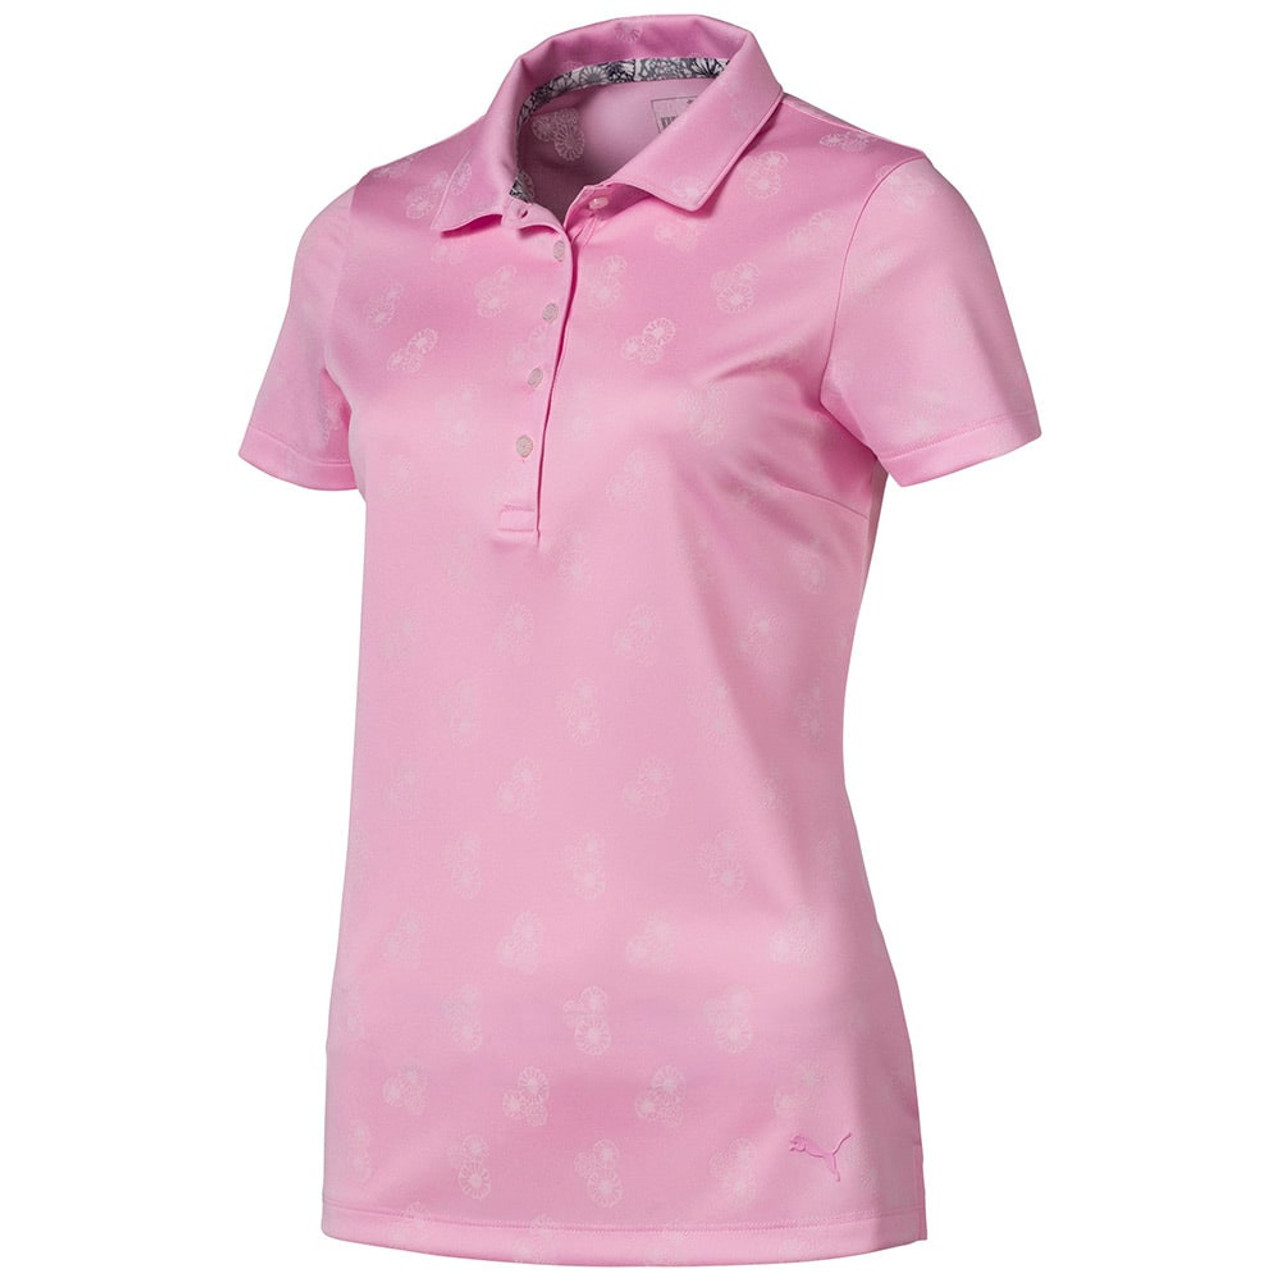 puma womens golf shirt